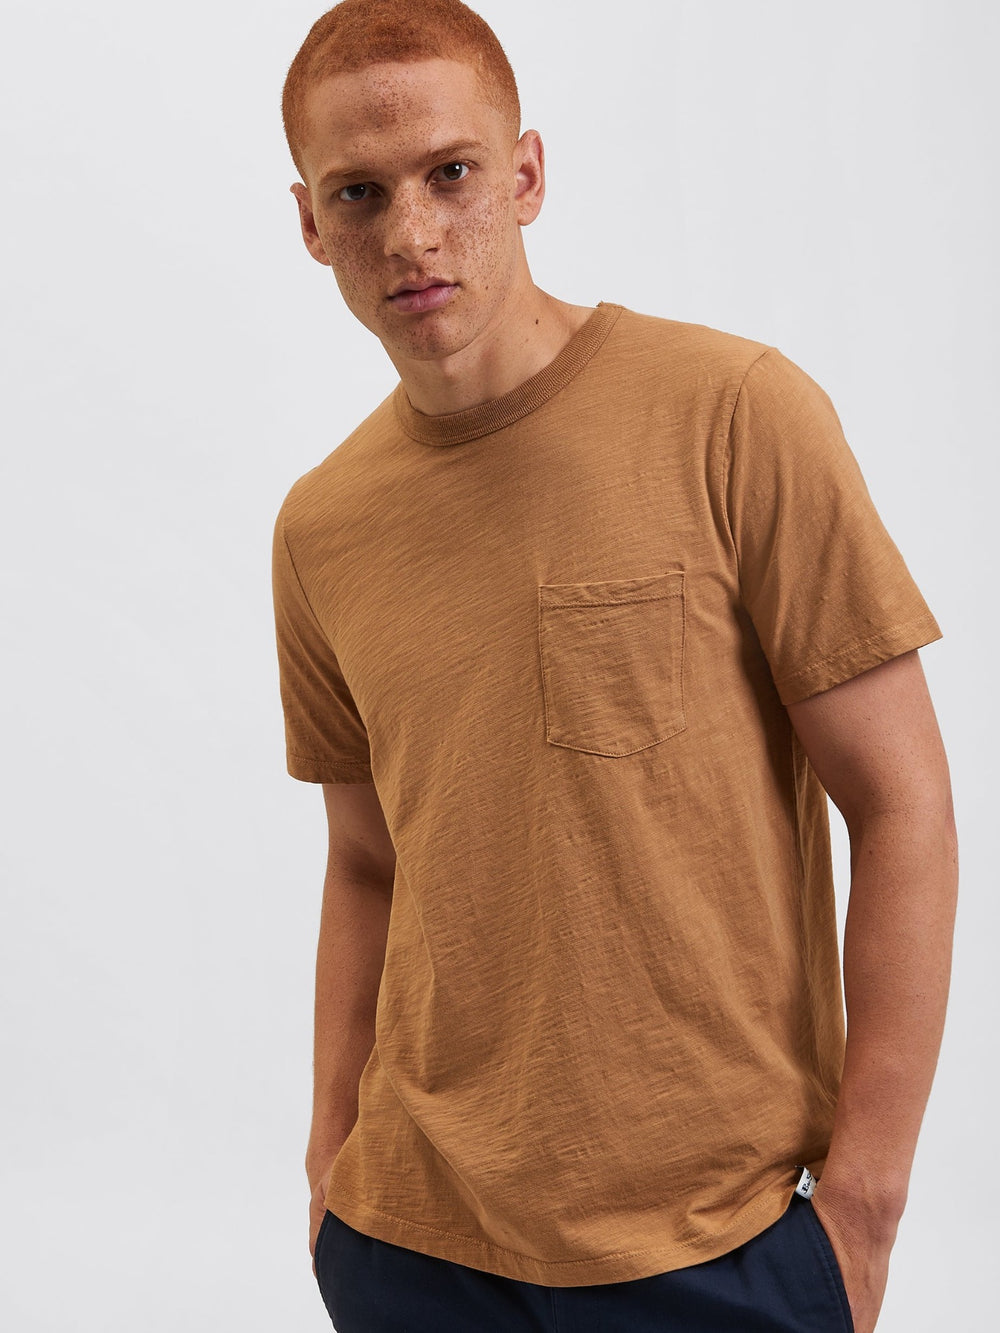 Garment Dye Beatnik Short-Sleeve T-Shirt - Camel